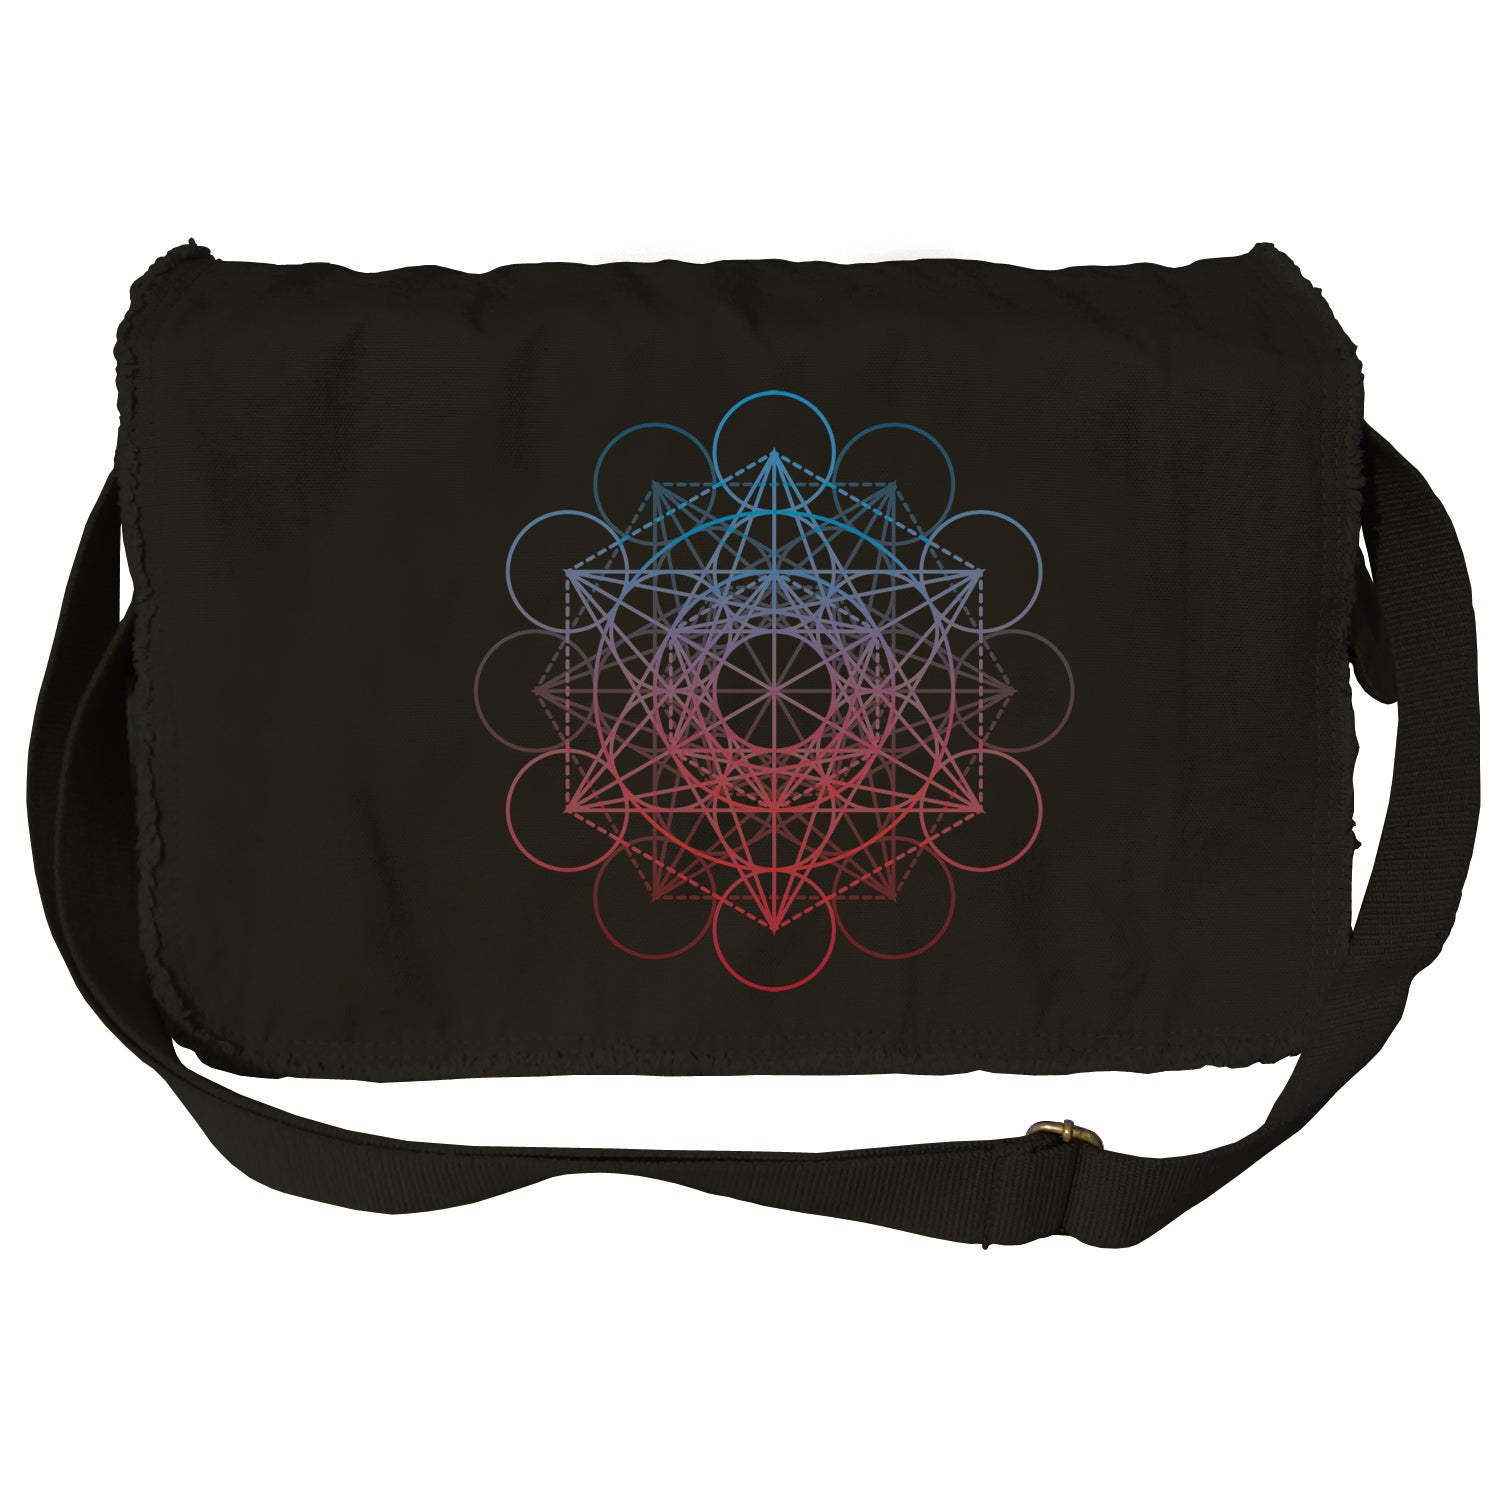 Metatrons Cube Rainbow Messenger Bag